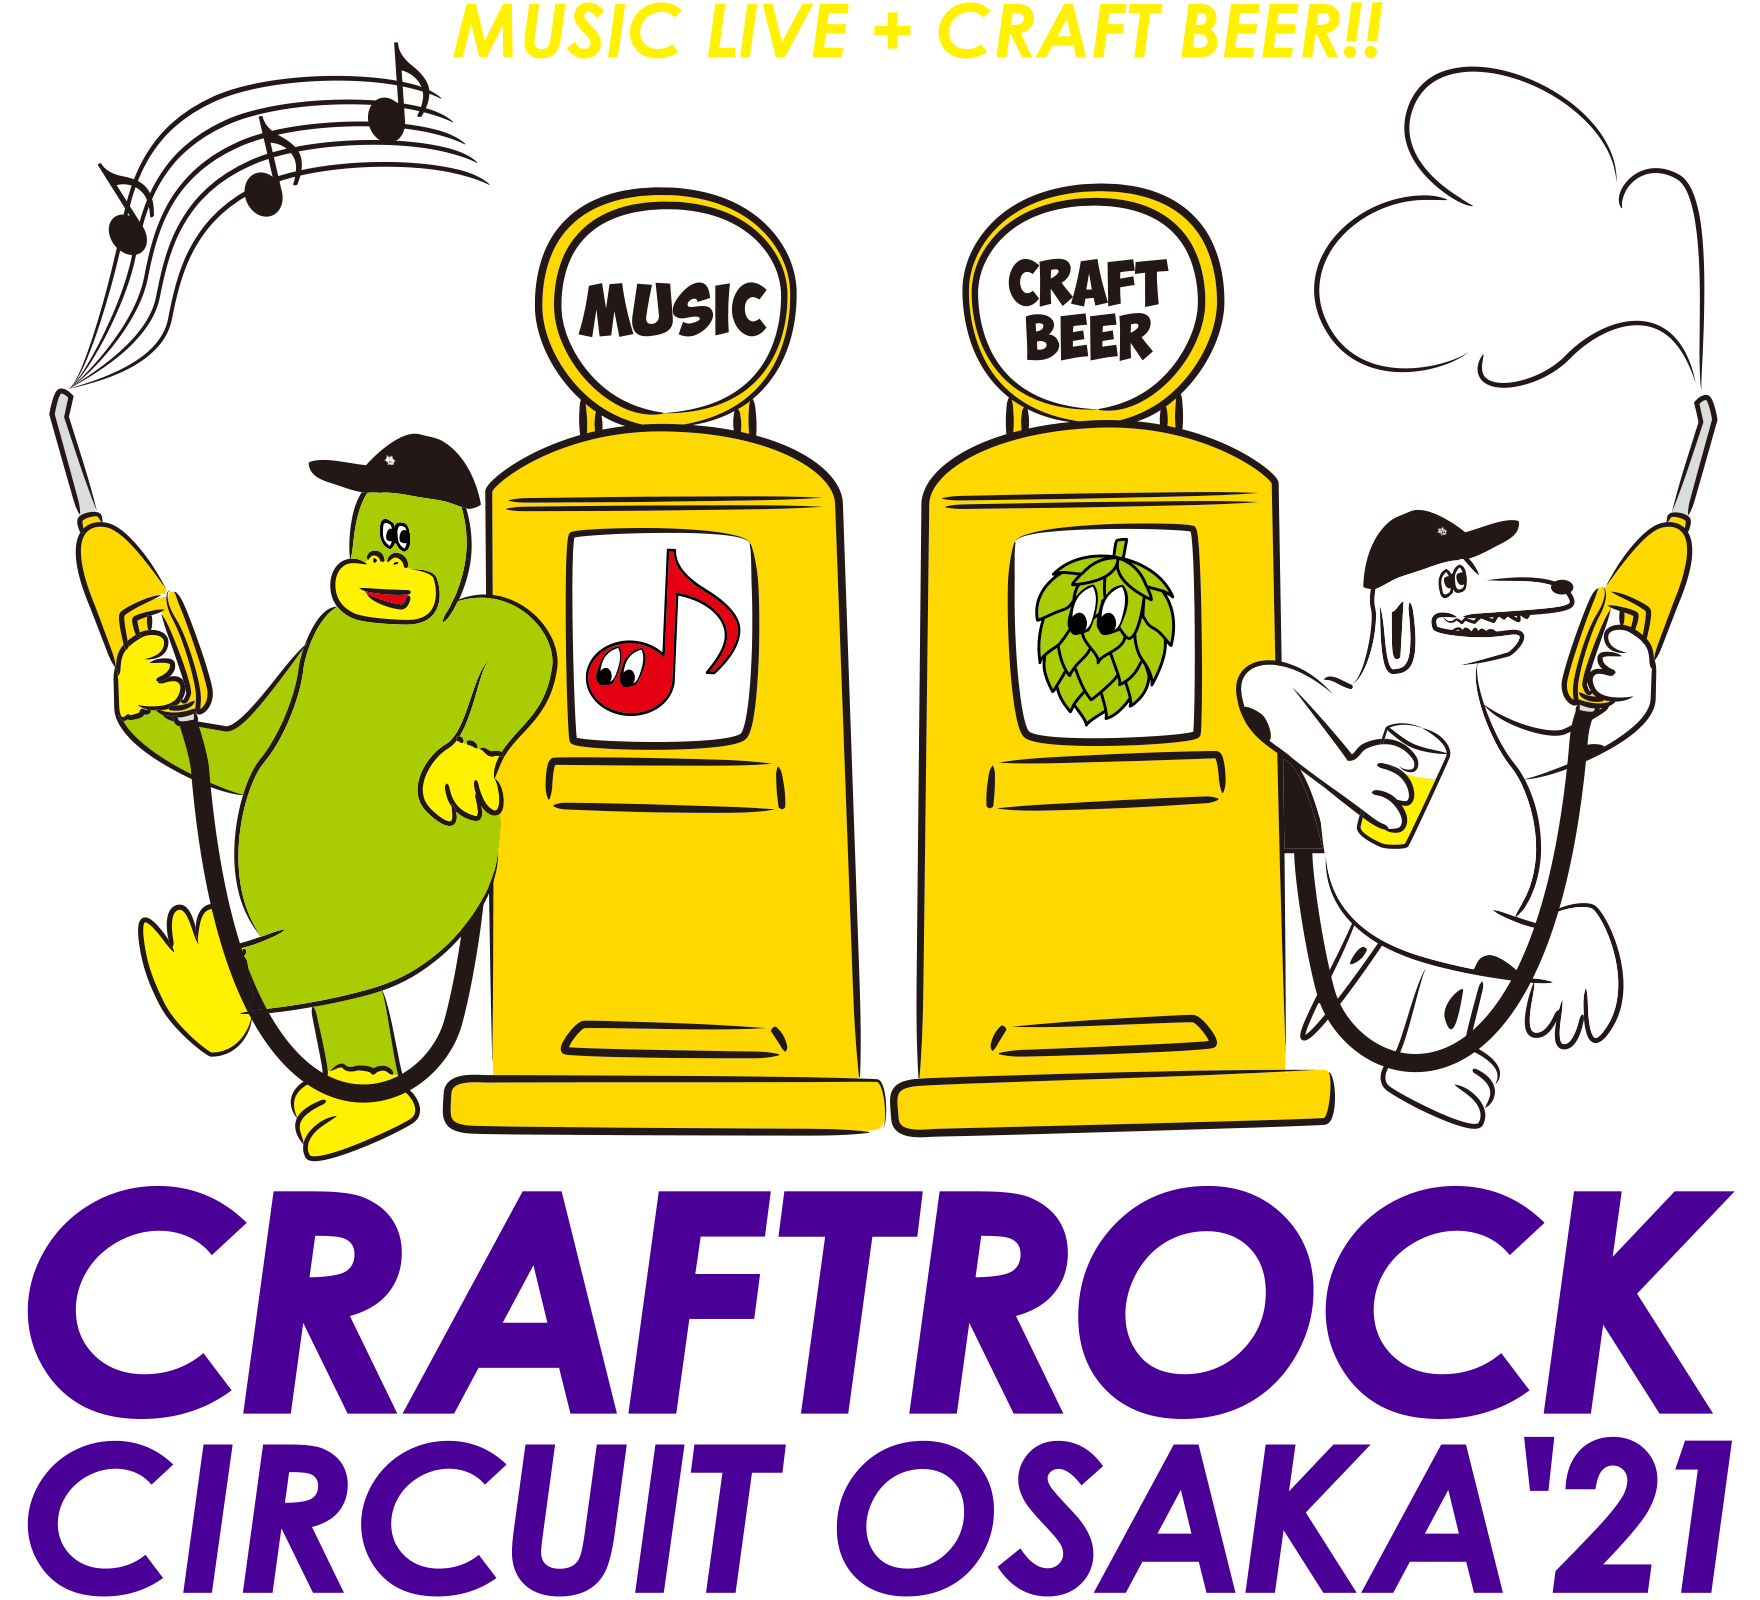 CRAFTROCK CIRCUIT OSAKA '21